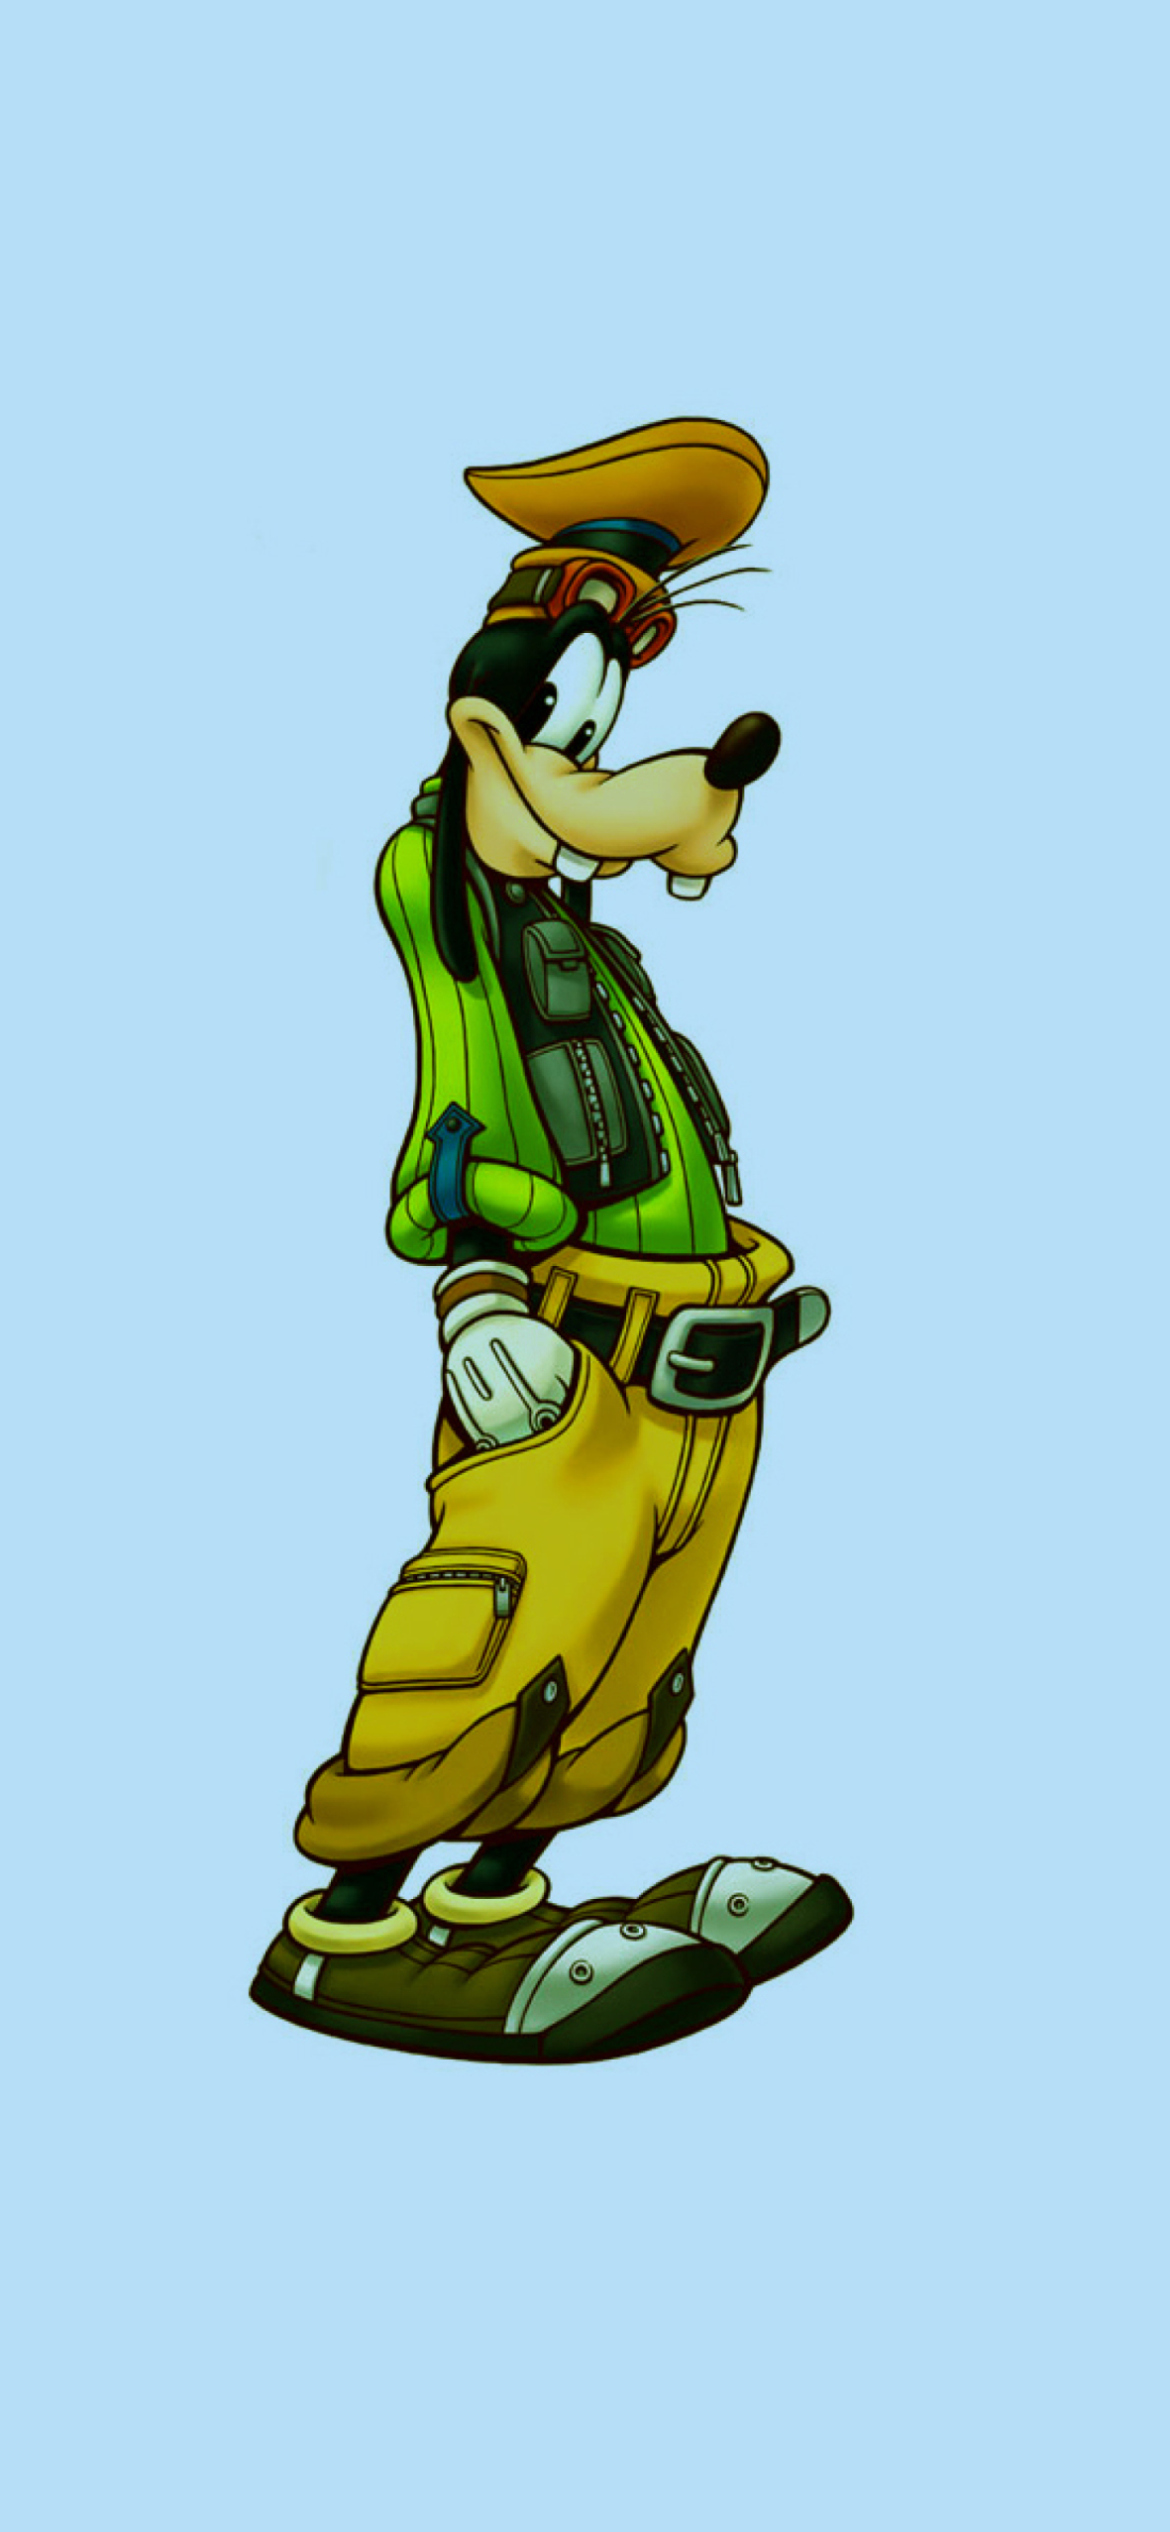 Обои Goof - Walt Disney Cartoon Character 1170x2532